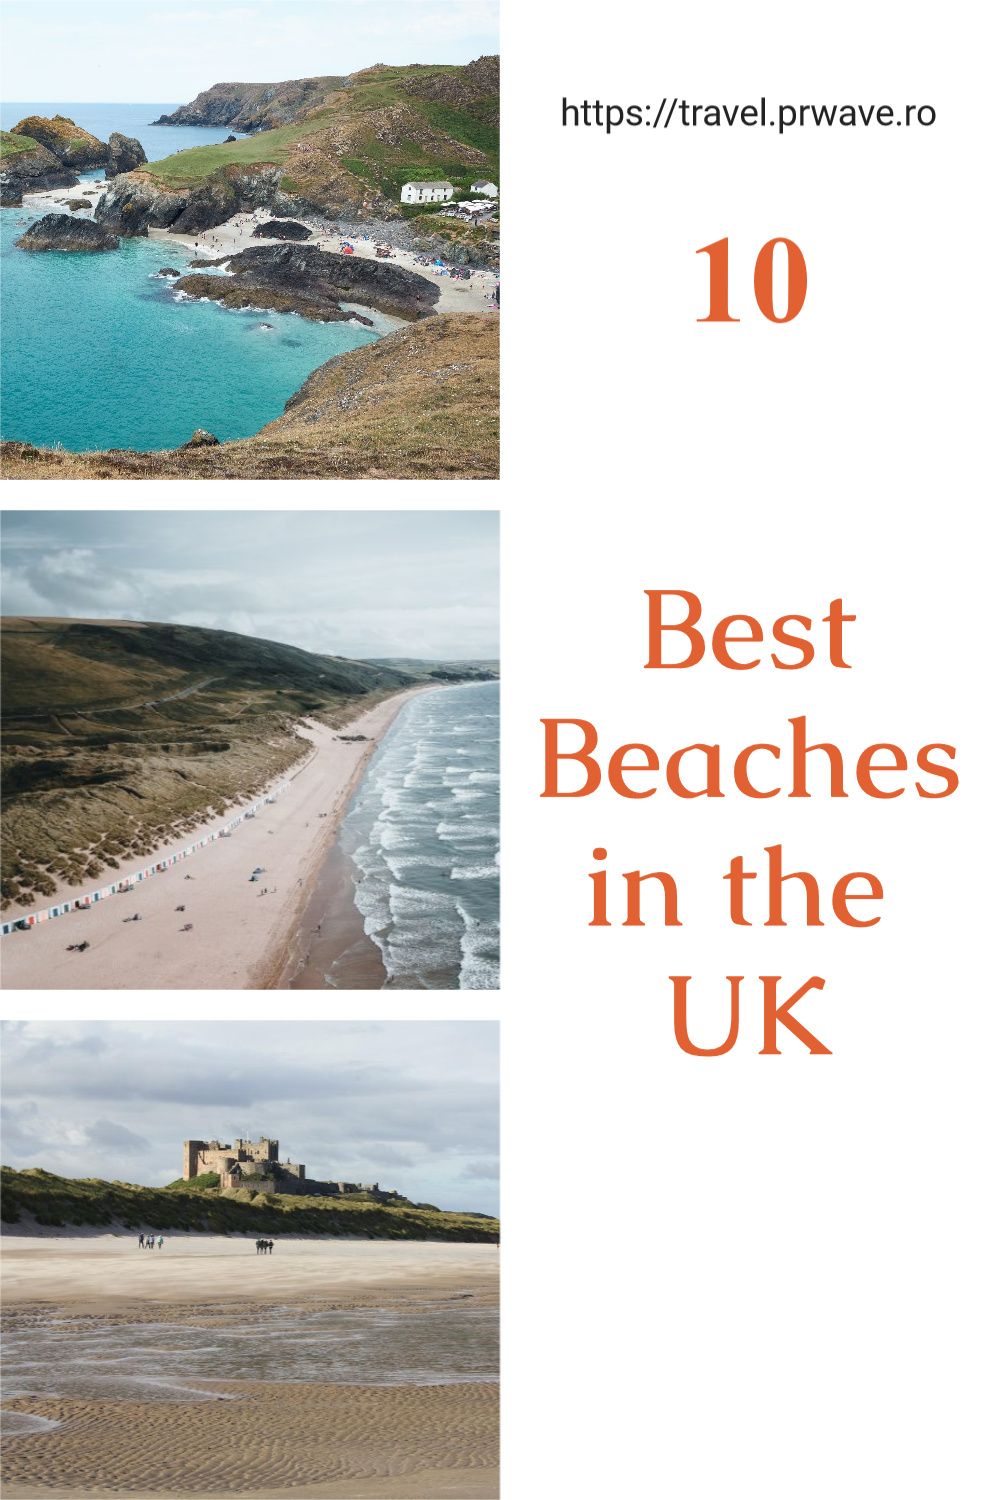 Top 10 beaches in the UK! Discover where to spend your UK summer vacation! #uk #ukbeaches #ukbeach #beach #summer #sand #europetravel #beachdestination #uktravel